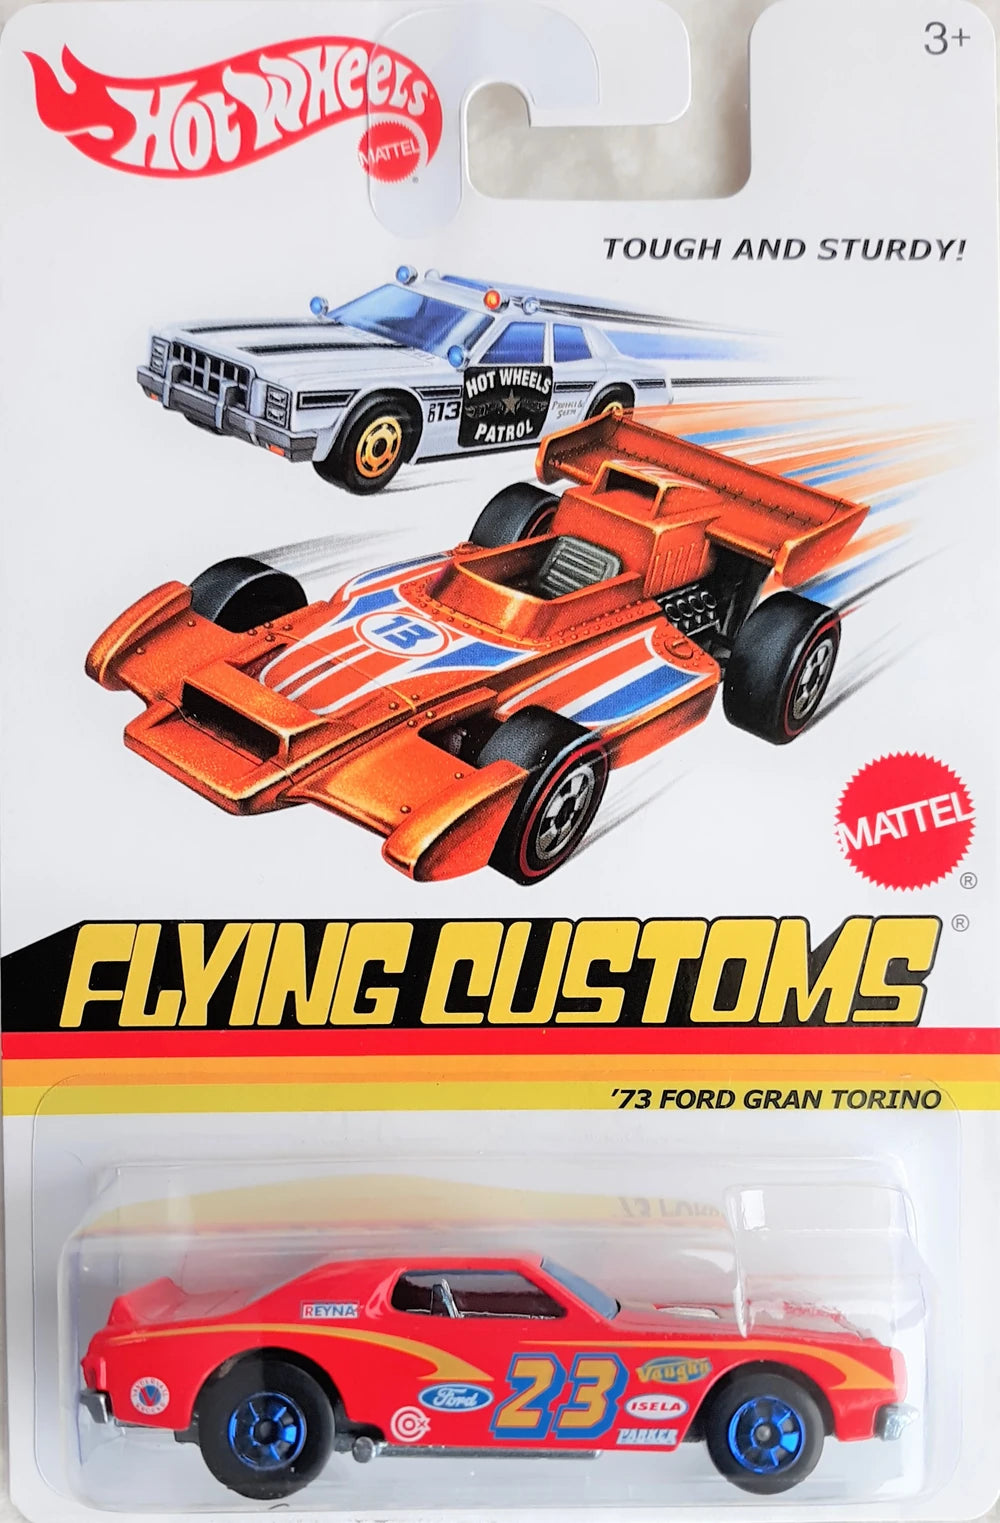 Hot Wheels 2013 - Flying Customs / Mix 2 - '73 Ford Gran Torino - Red / #23 & Various Racing Decals - Blue Basic Wheels - Metal/Metal - Target Exclusive